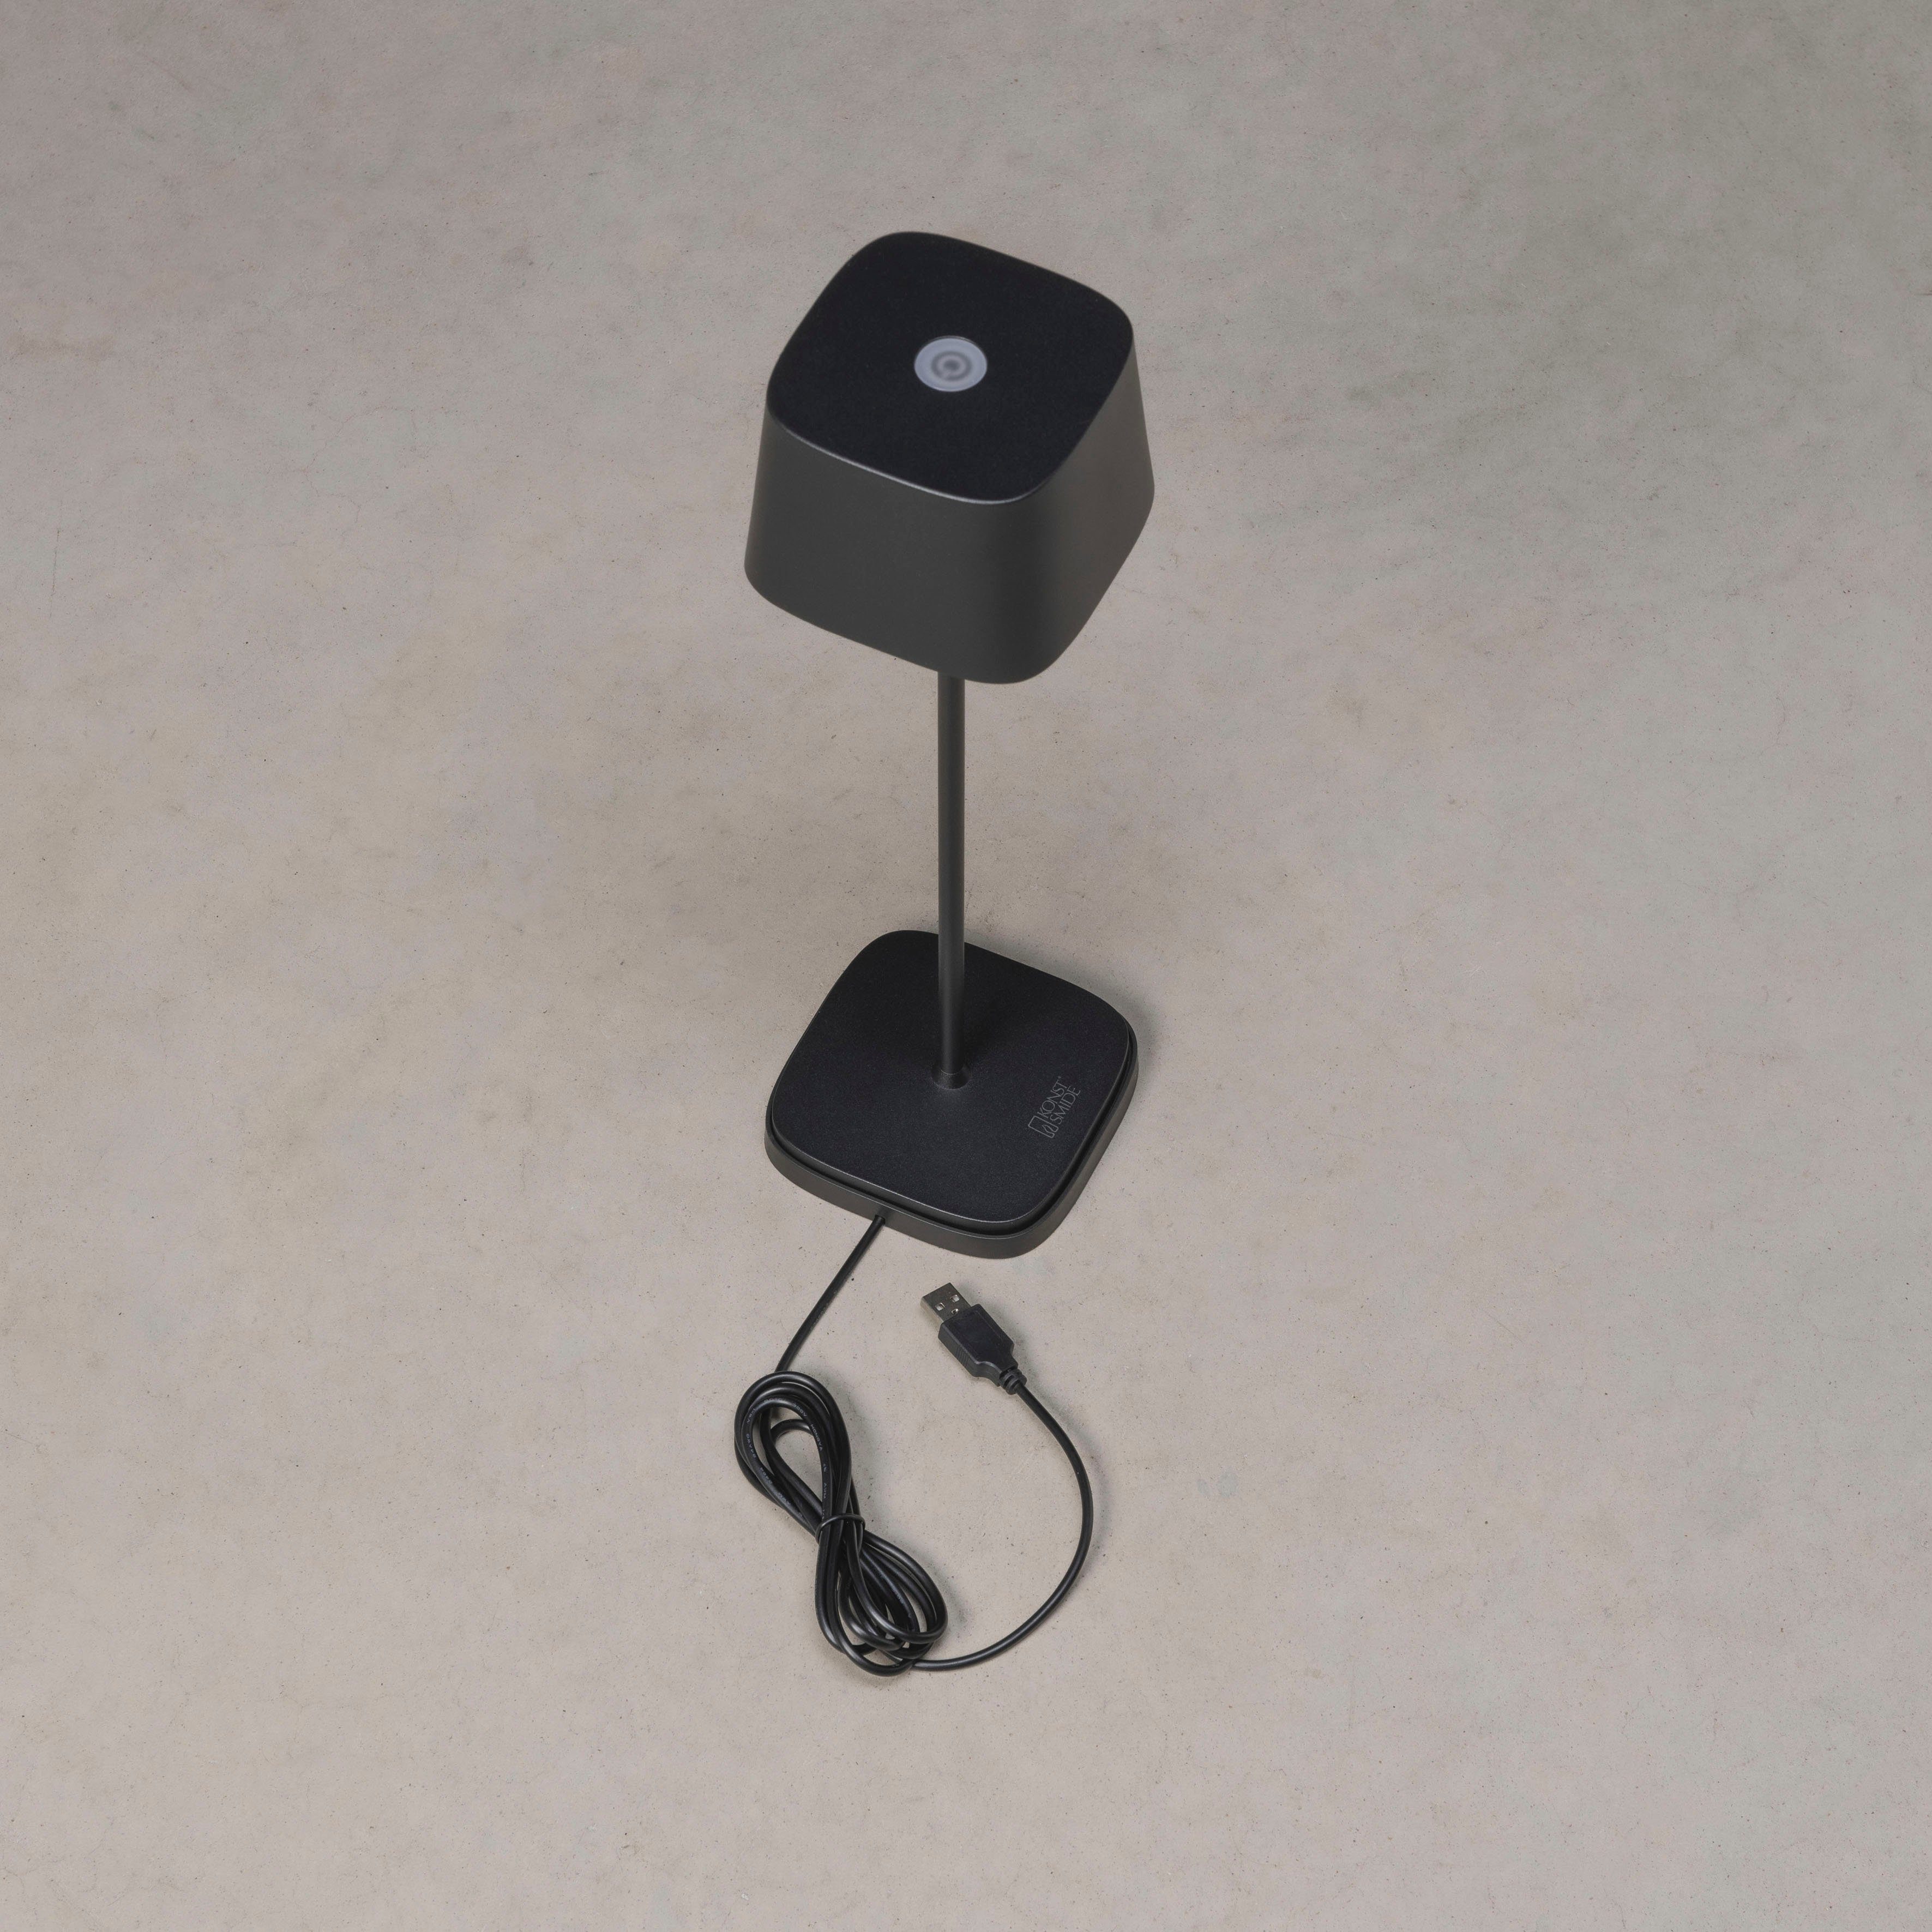 KONSTSMIDE LED Tischleuchte fest Warmweiß, LED Farbtemperatur, schwarz, Capri Capri, LED dimmba USB-Tischleuchte integriert